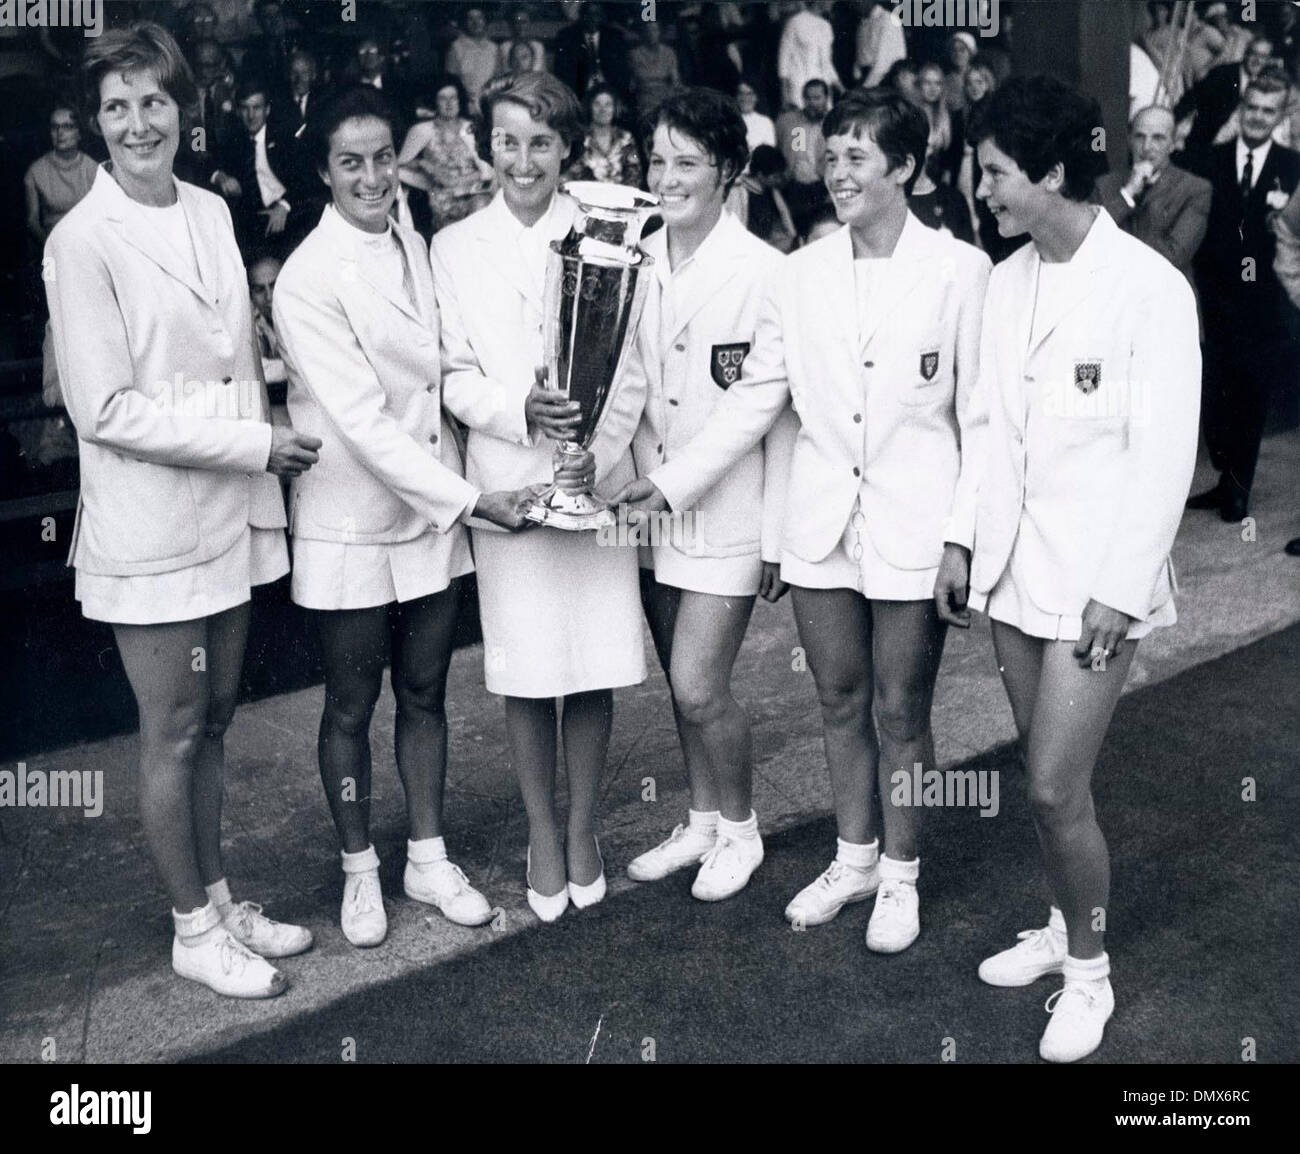 Jun 16, 1968 - London, England, United Kingdom - CHRISTINE JANES (L); VIRGINIA WADE, ANGELA BARRETT, NEIL TRUMAN, WINNE SHAW, and JOYCE WILLIAMS are the winners of the Wightman Cup at Wimbledon. (Credit Image: © KEYSTONE Pictures/ZUMAPRESS.com) Stock Photo